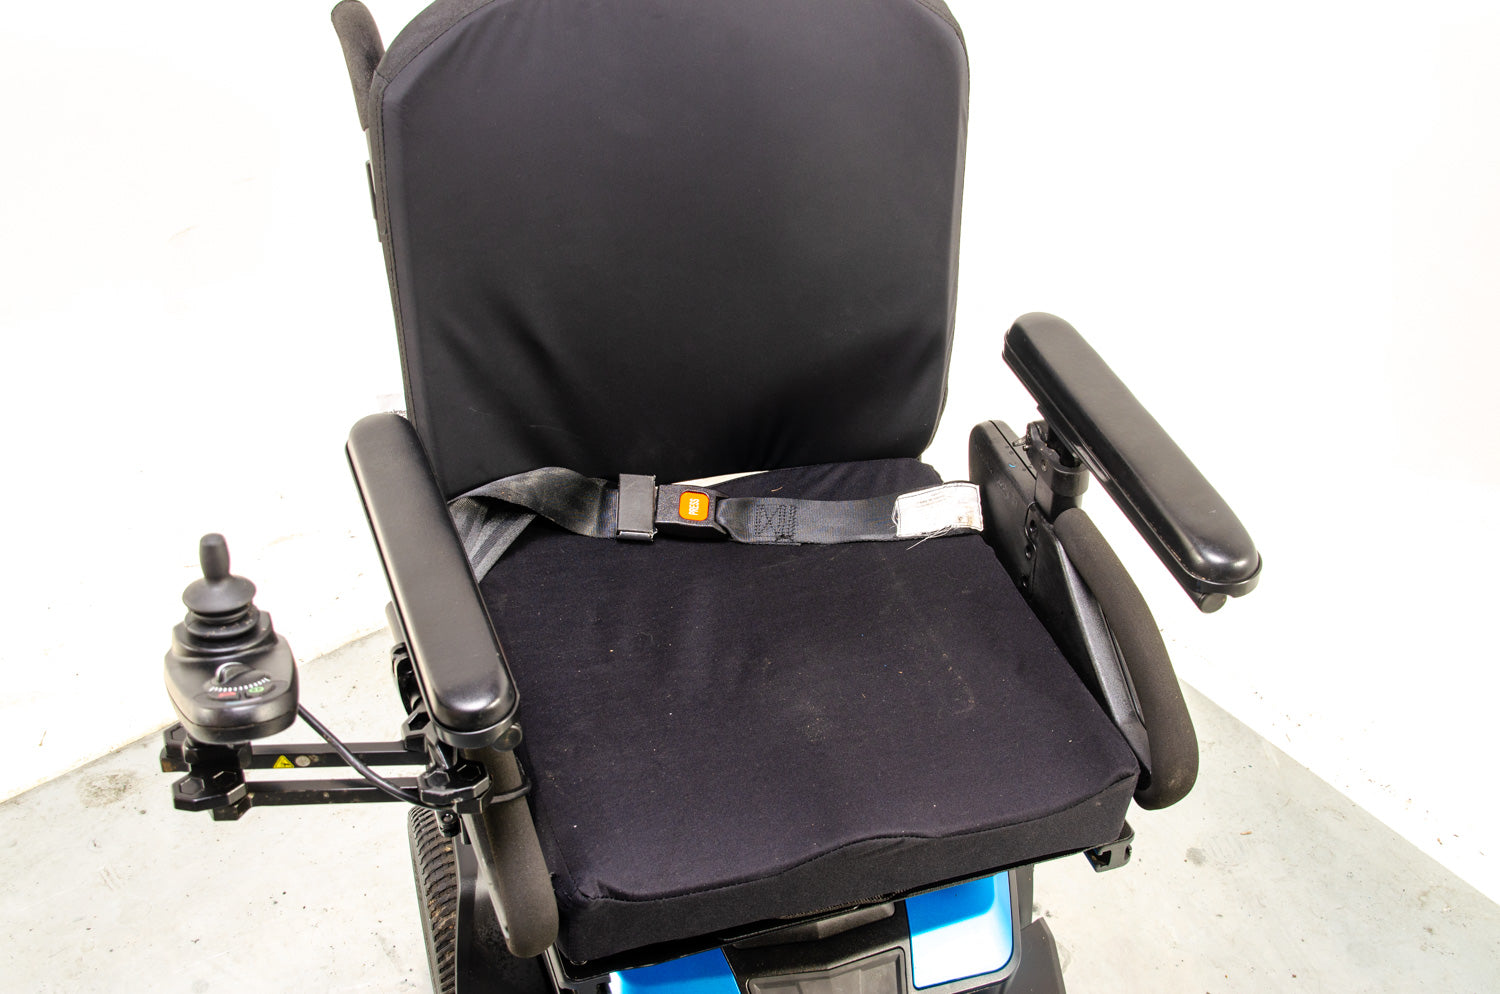 Quantum Kozmo Portable Powerchair Compact Agile Electric Wheelchair Indoor Pride Go-Chair Transportable